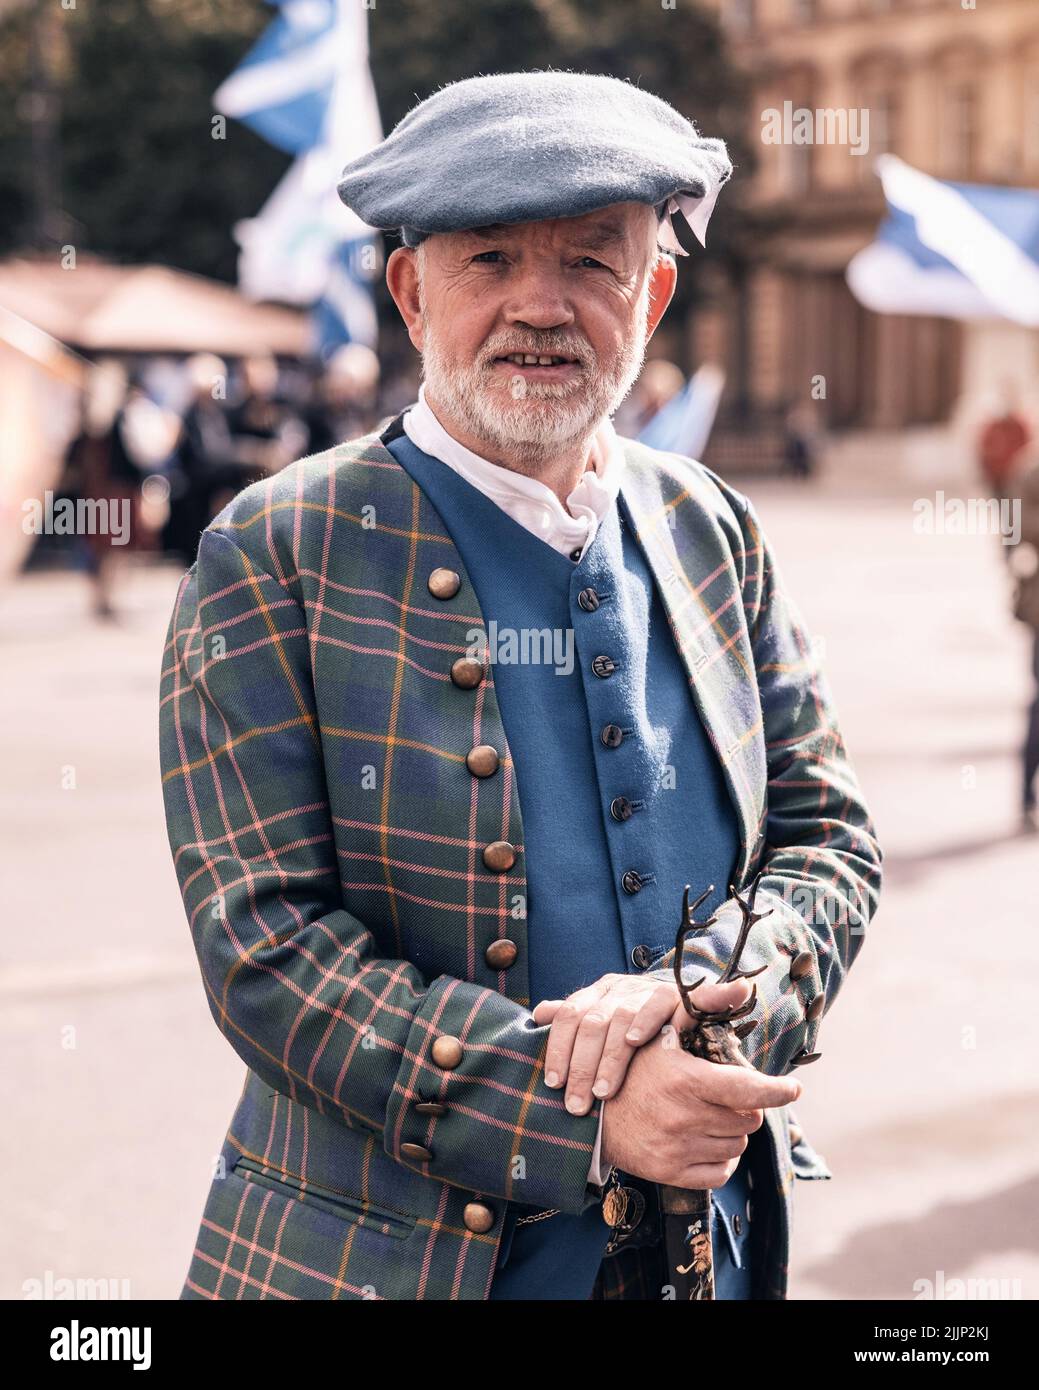 A closeup of a senior Scottish man wearing a tartan jacket and hat in Glasgow, United Kingdom Stock Photo